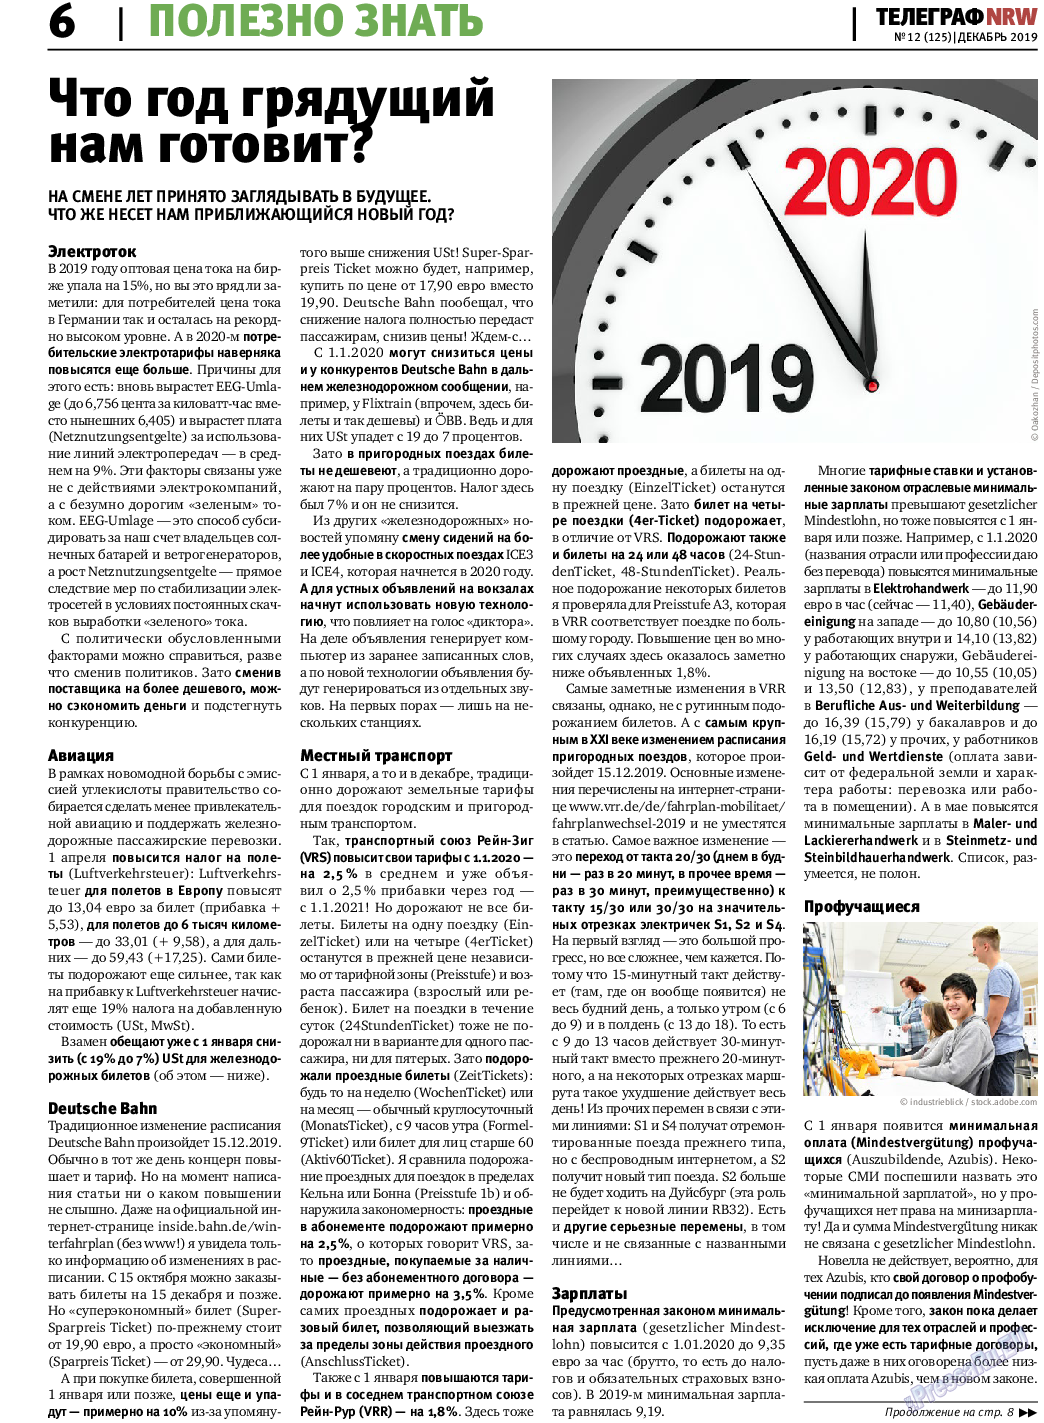 Телеграф NRW, газета. 2019 №12 стр.6